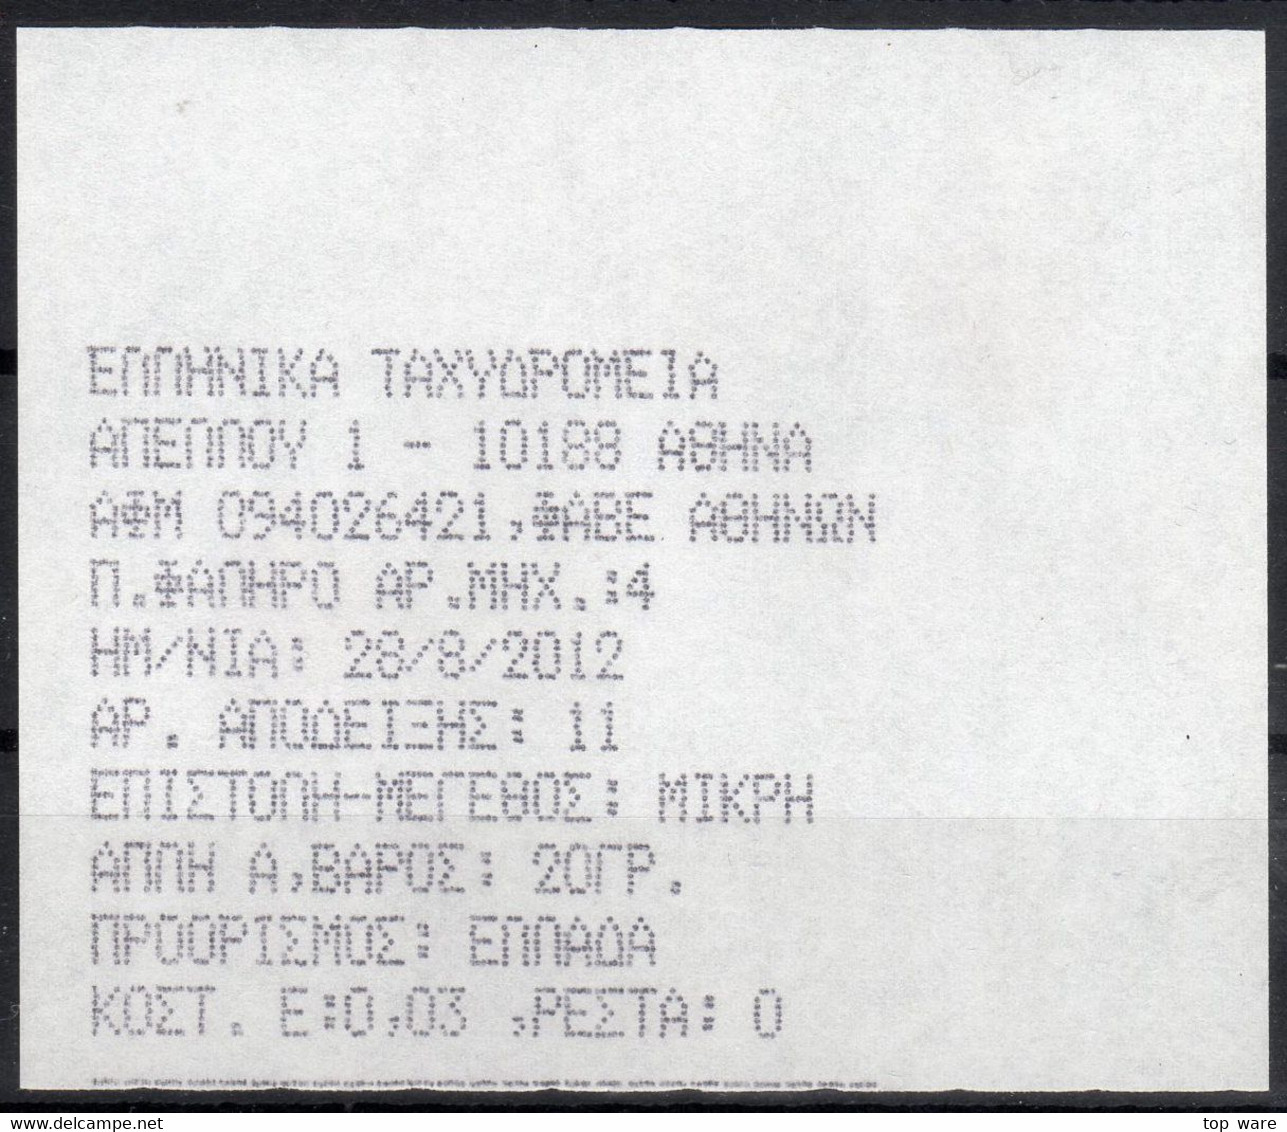 Greece Griechenland HELLAS ATM 23 Temple Colums * Red * Euro 0,03 MNH + Receipt * Frama Etiquetas Automatenmarken - Viñetas De Franqueo [ATM]